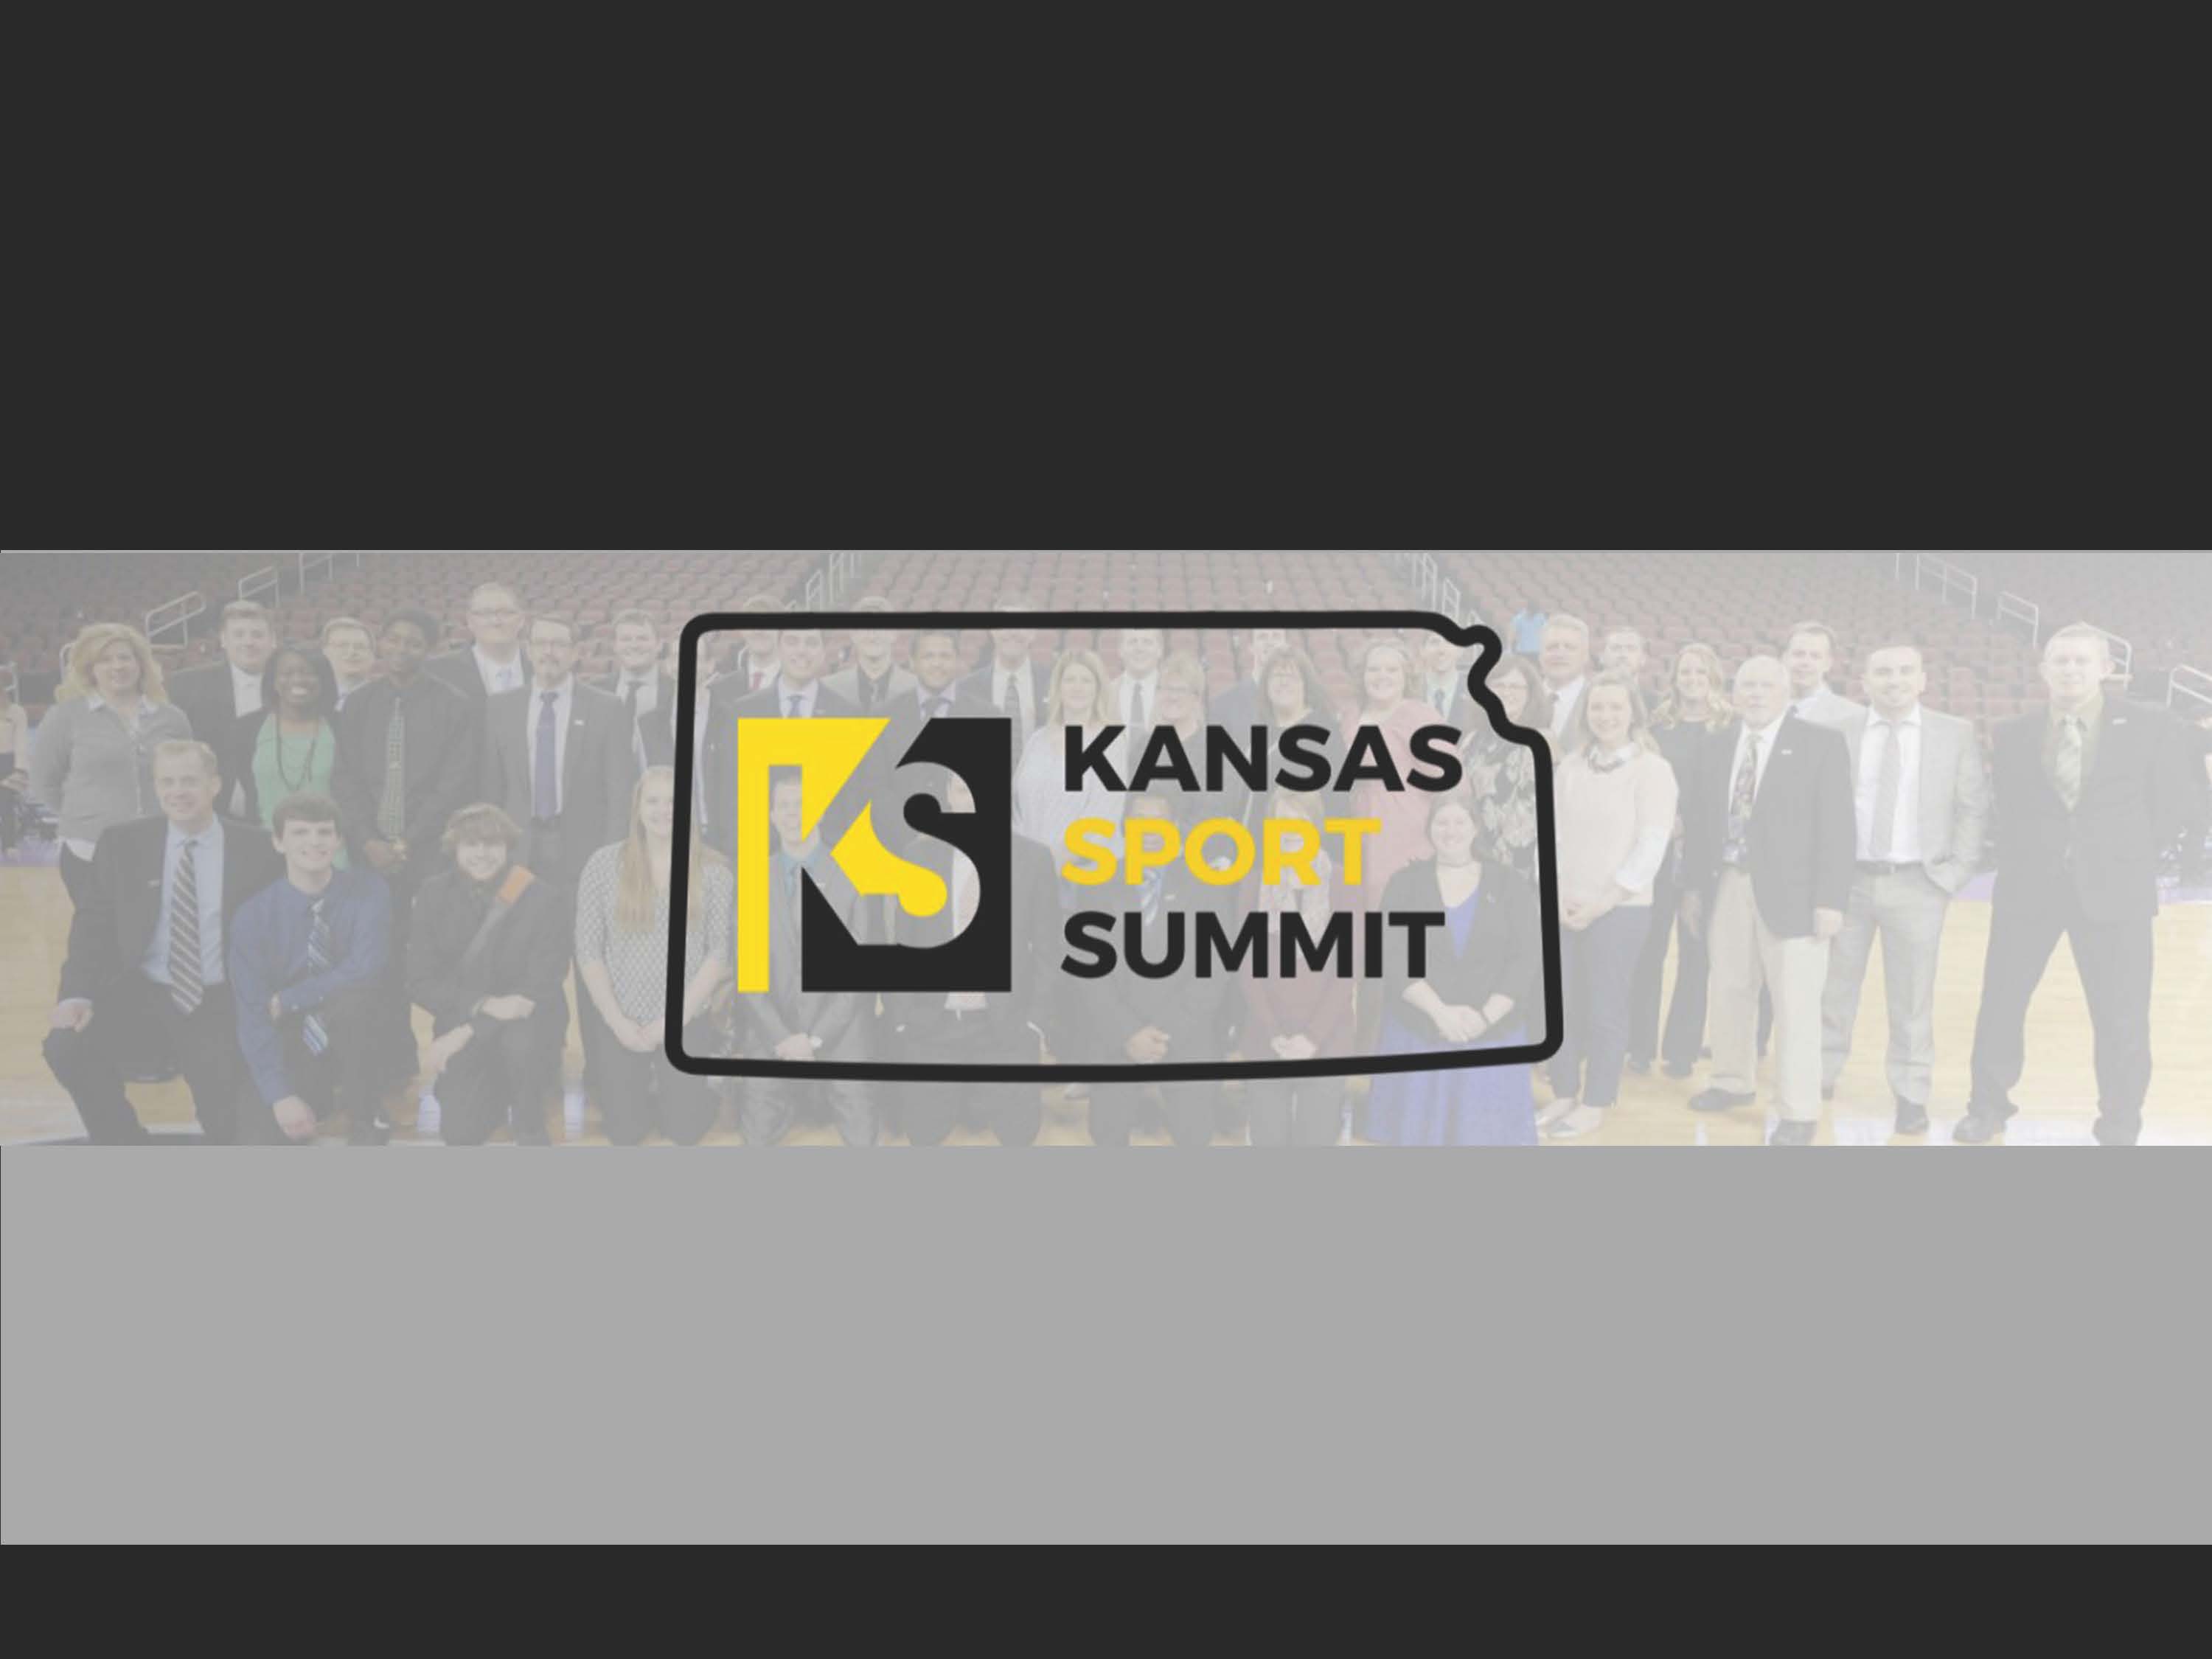 Kansas Sport Summit logo heading image. 